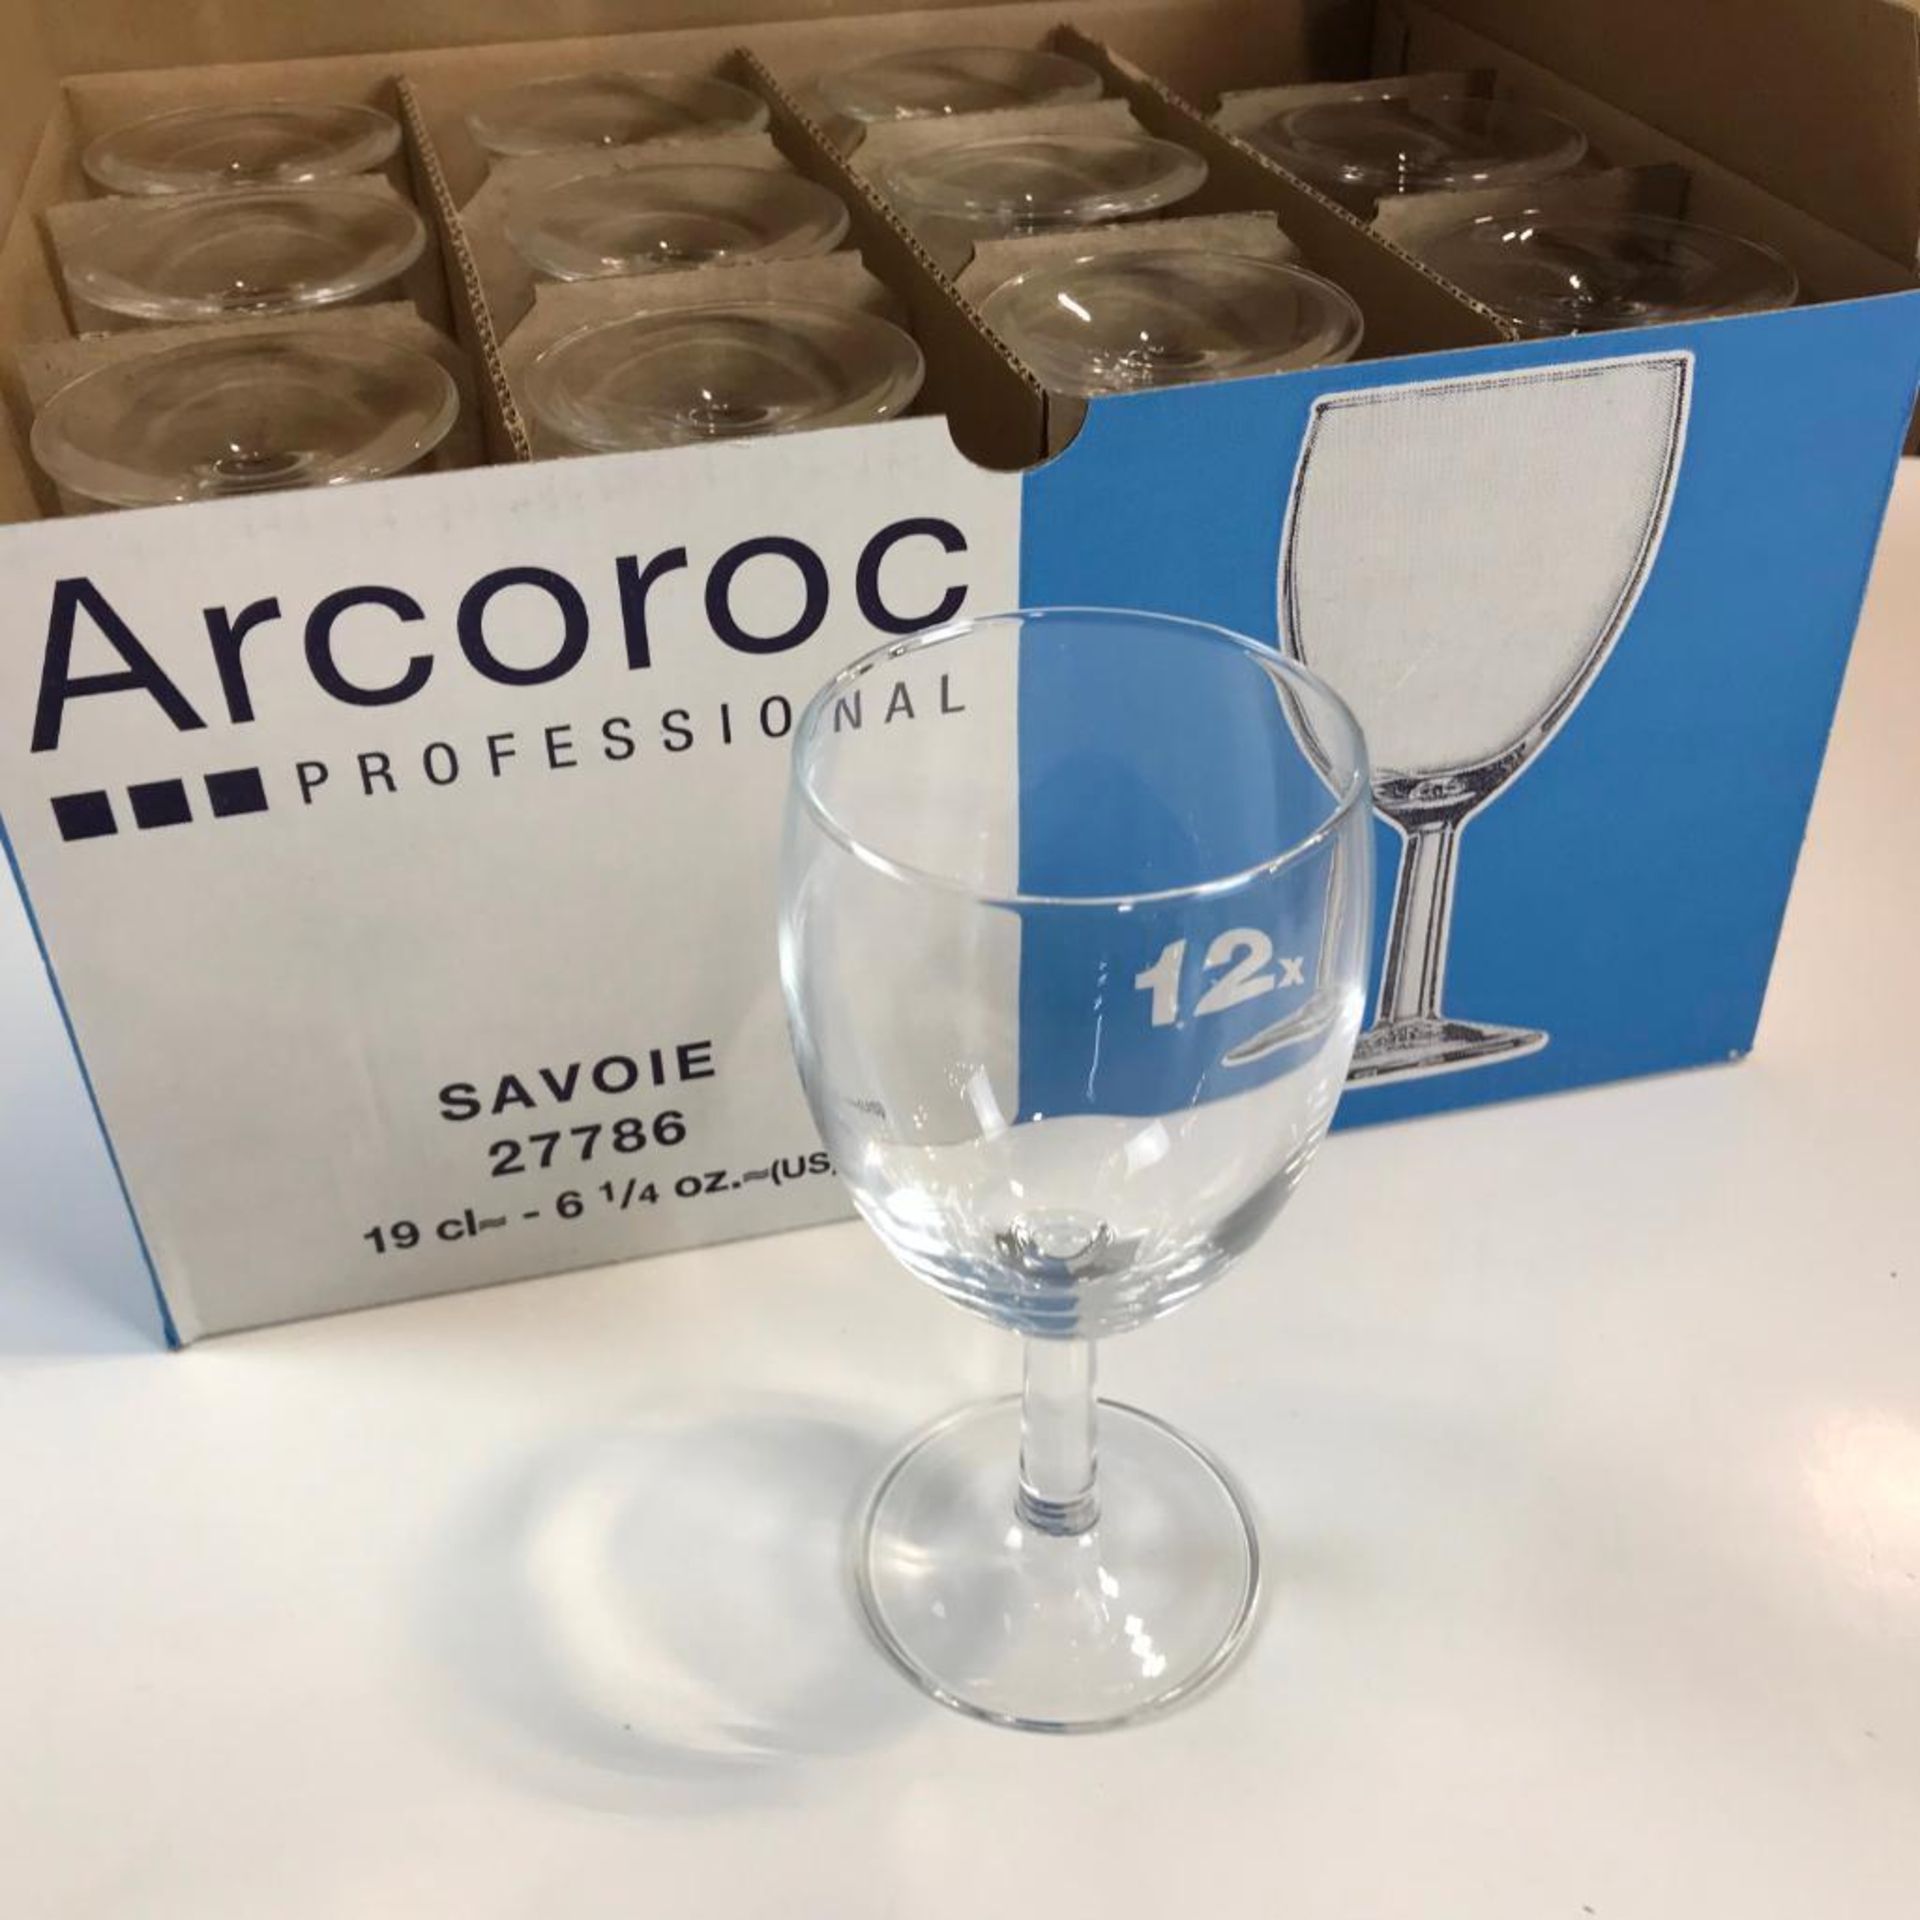 6.7OZ/190ML SAVOIE WINE GLASSES, ARCOROC 27786 - CASE OF 12 - NEW